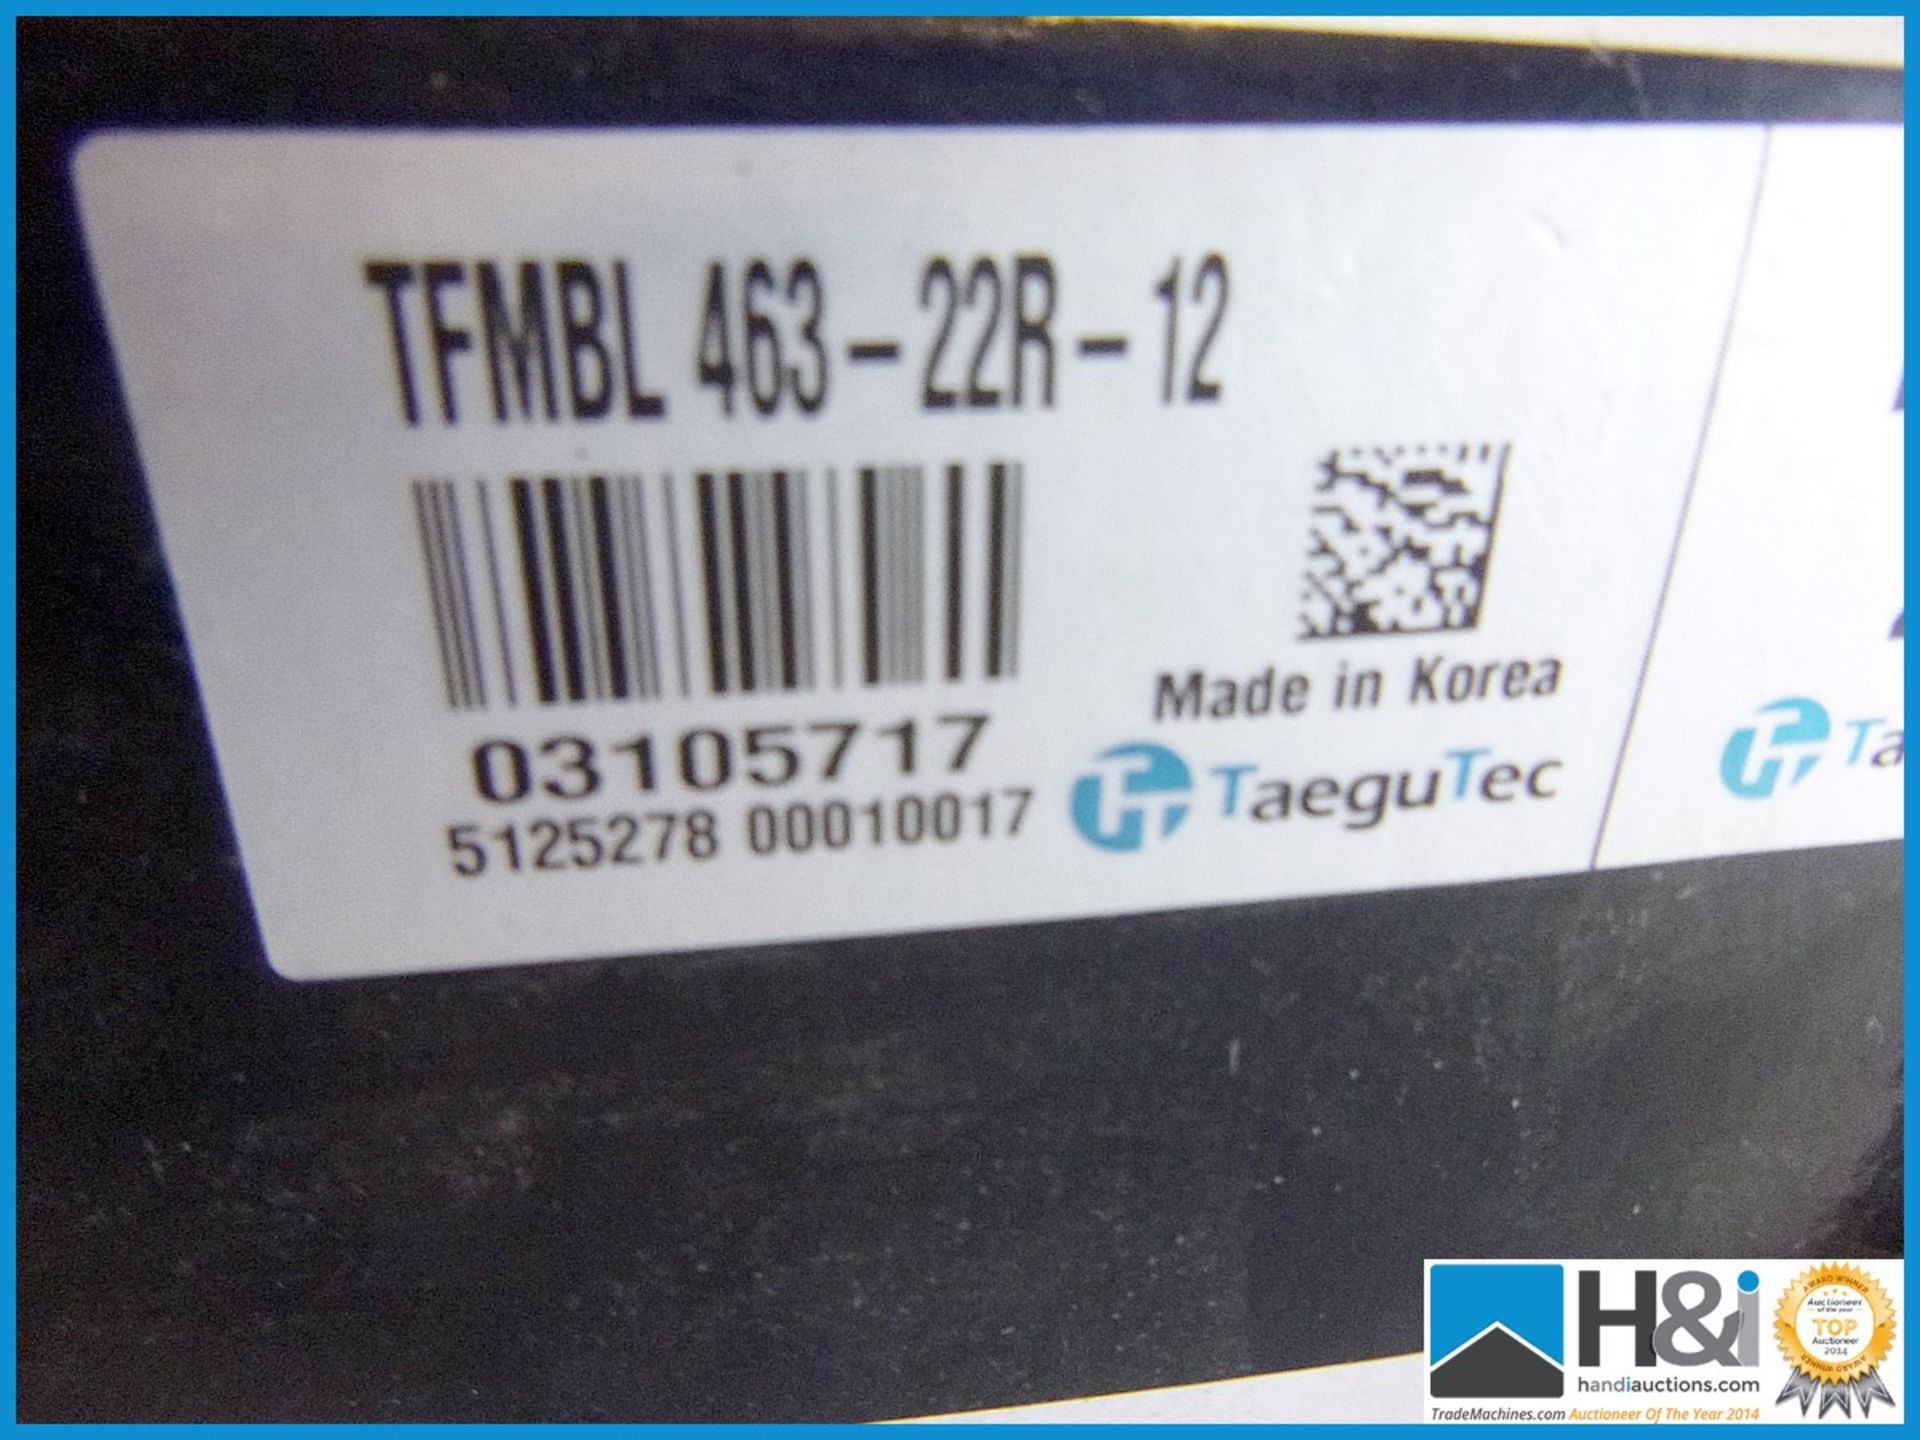 TFMBL463-22-R12 TAEGUTEC. Appraisal: New, unused in original packaging. Viewing essential Serial No: - Image 2 of 4